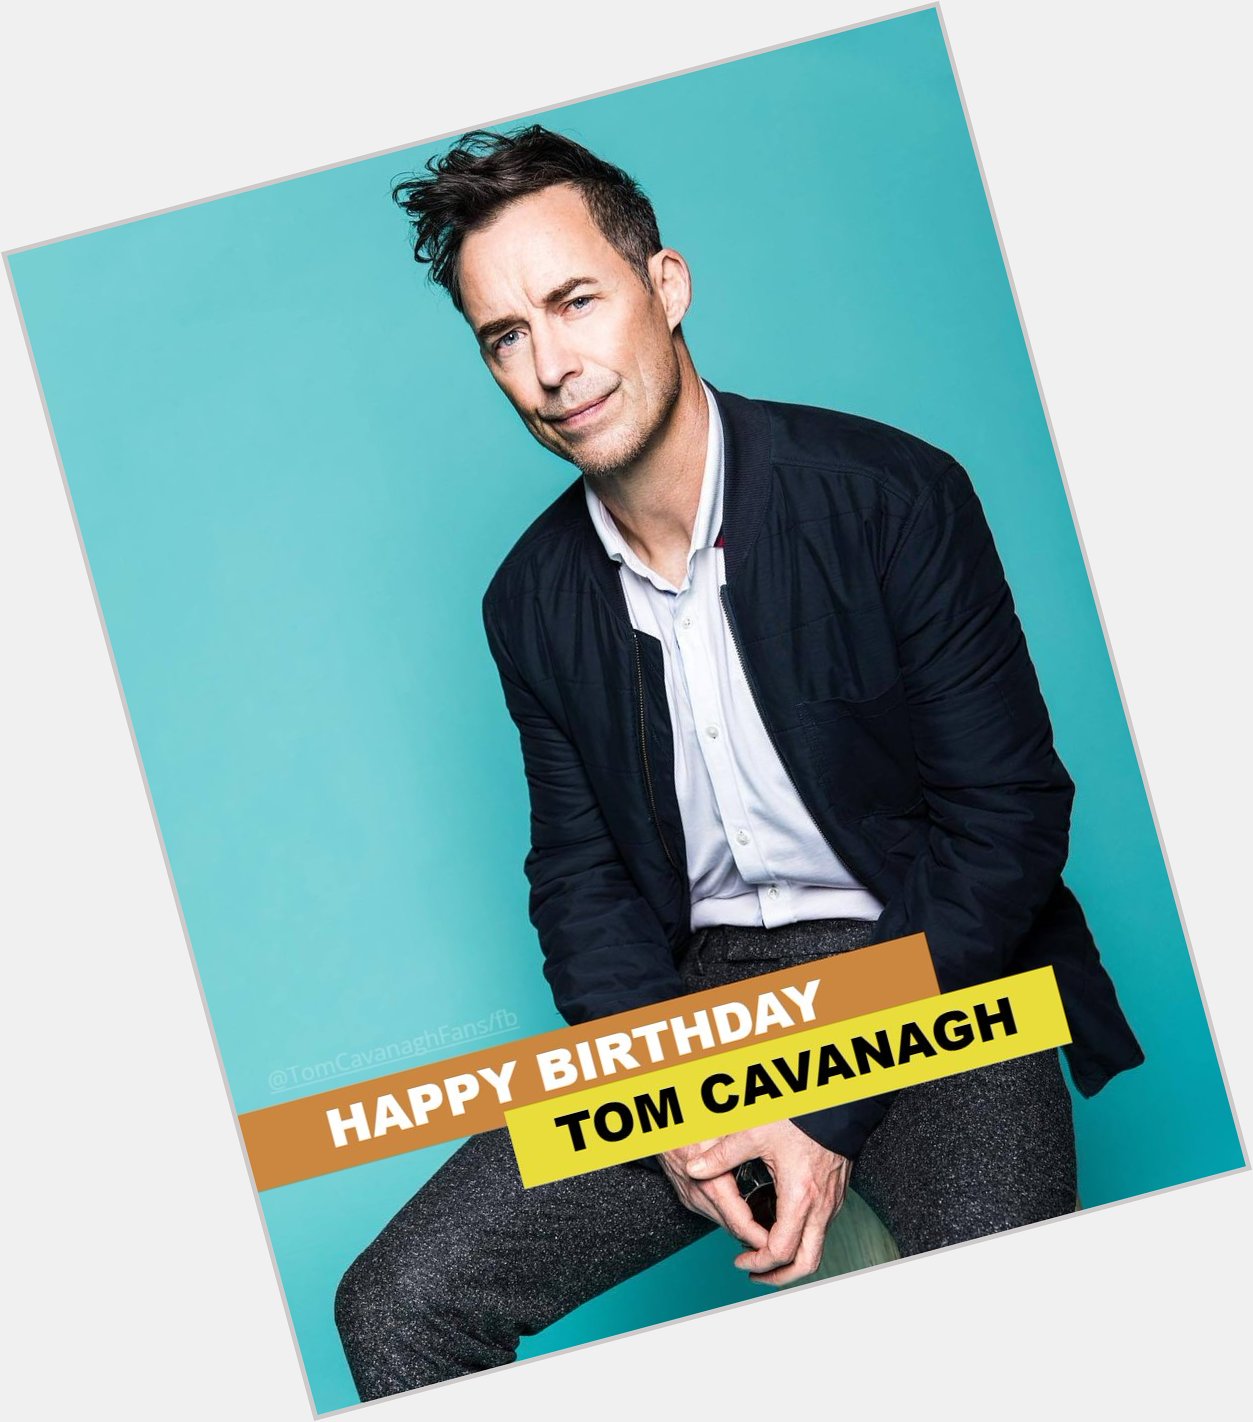   HAPPY BIRTHDAY TOM CAVANAGH   